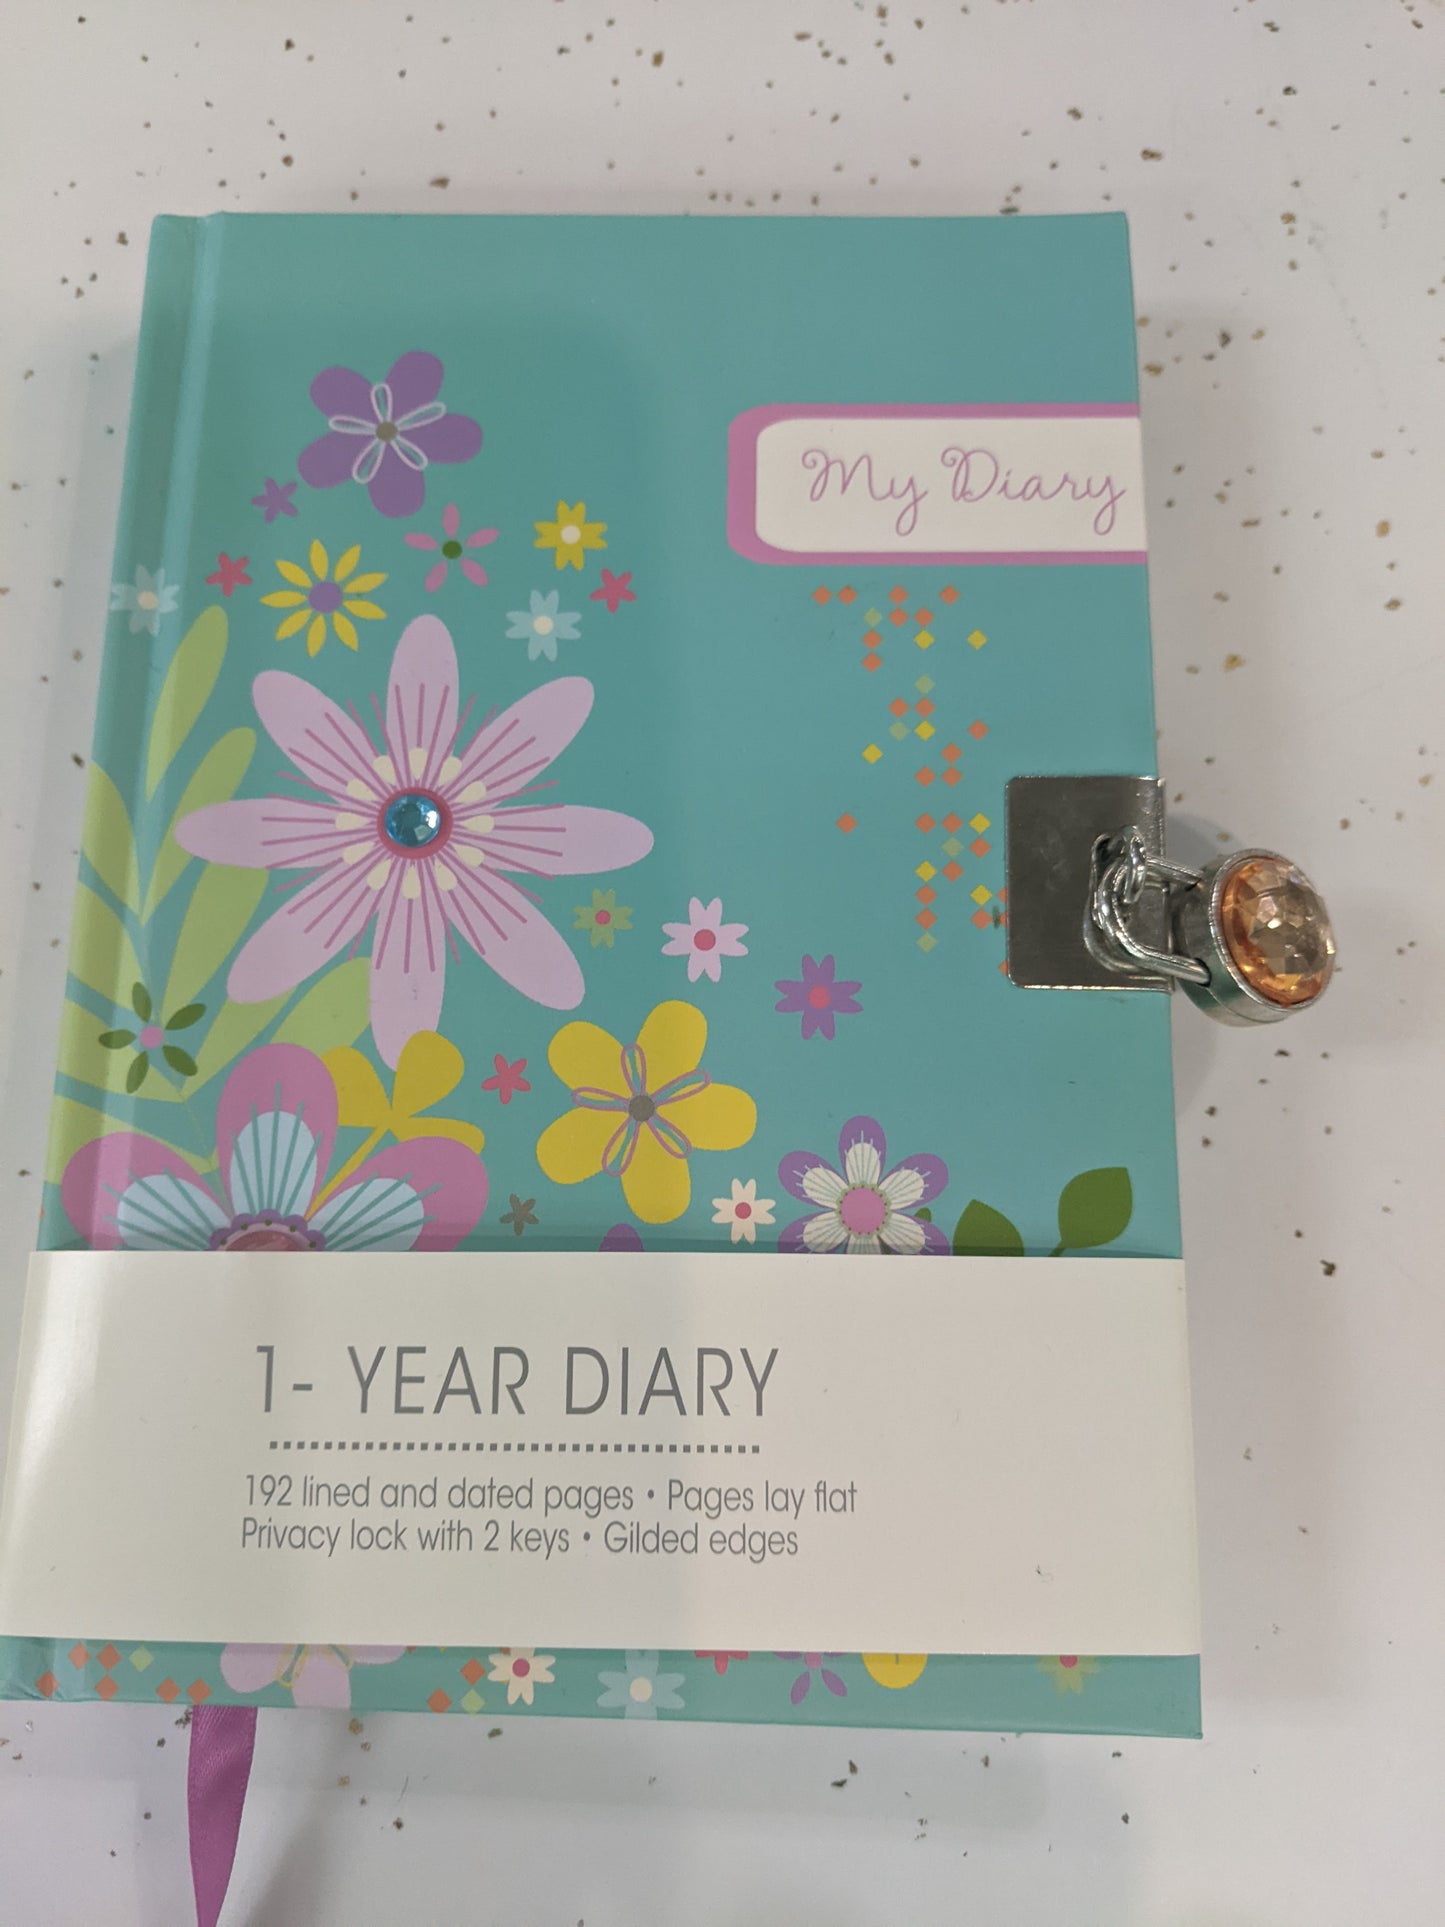 One year Diary